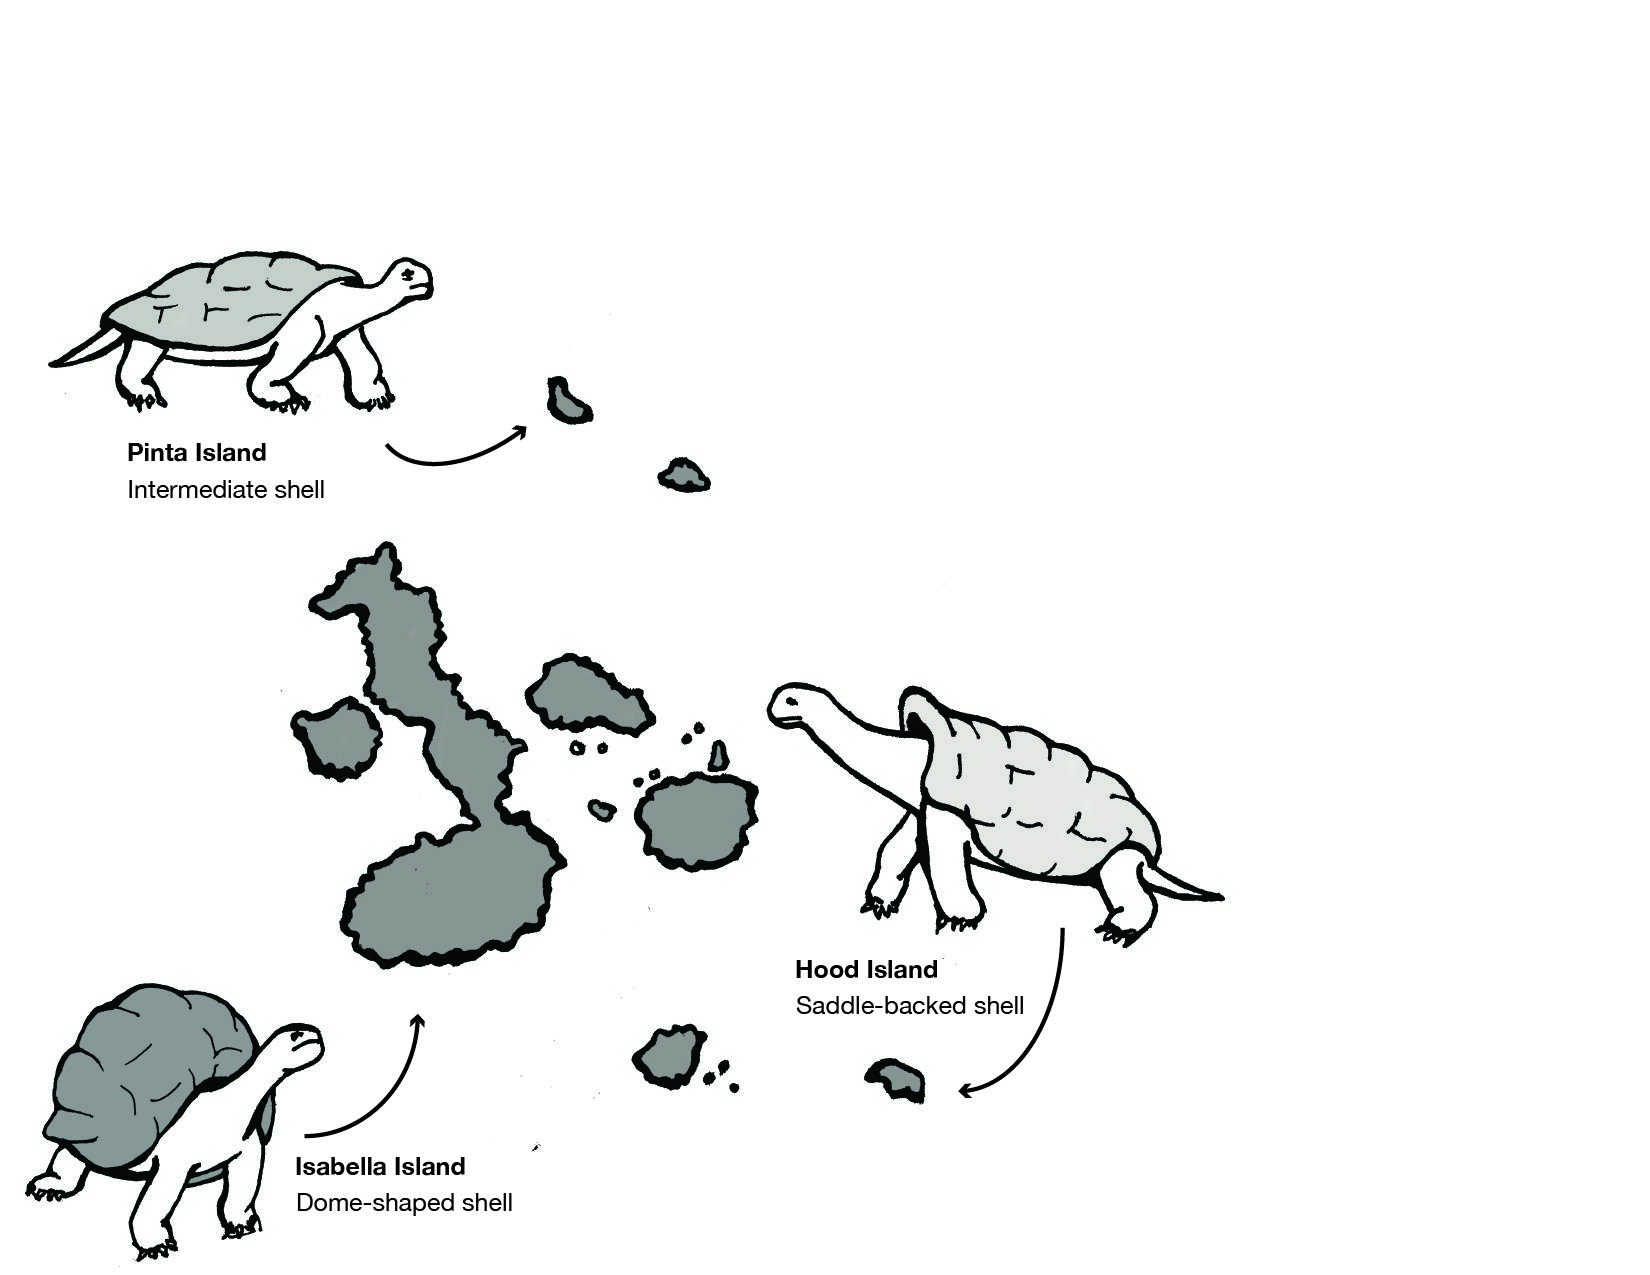 Hood Island tortoises have saddle-backed shells; Isabella Island, dome-shaped; Pinta Island, intermediate.